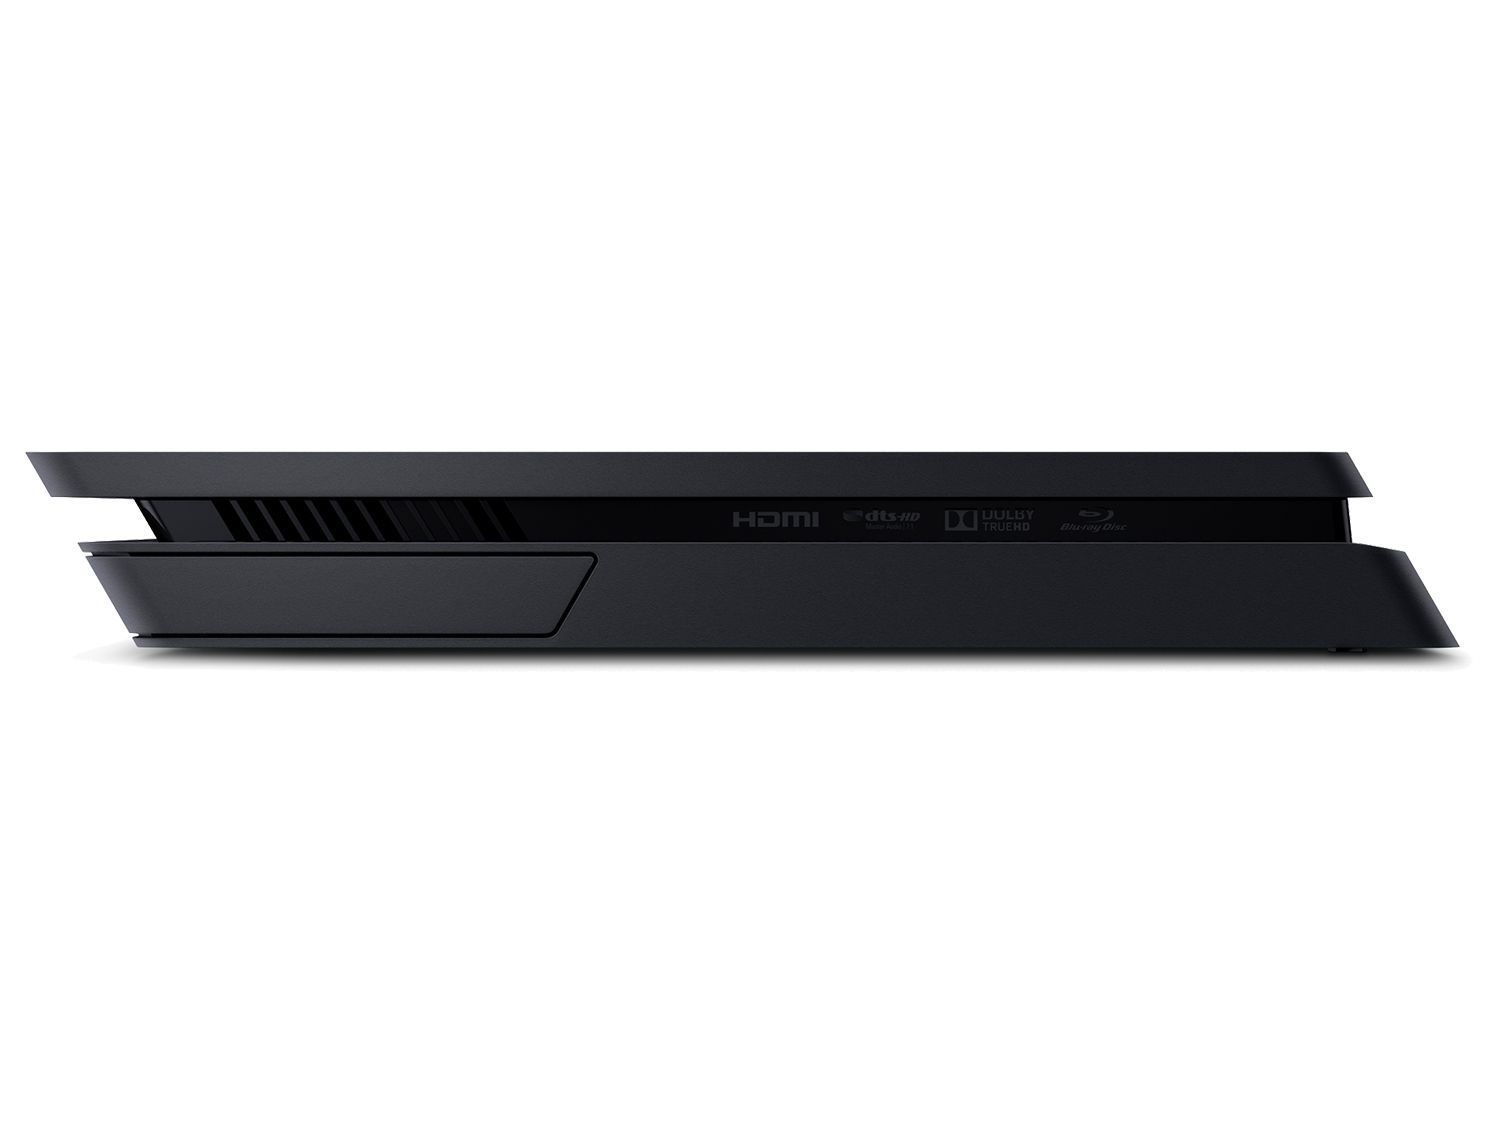 Streng condensor Fabriek SONY Playstation 4 Slim 500GB Jet Black | LIDL